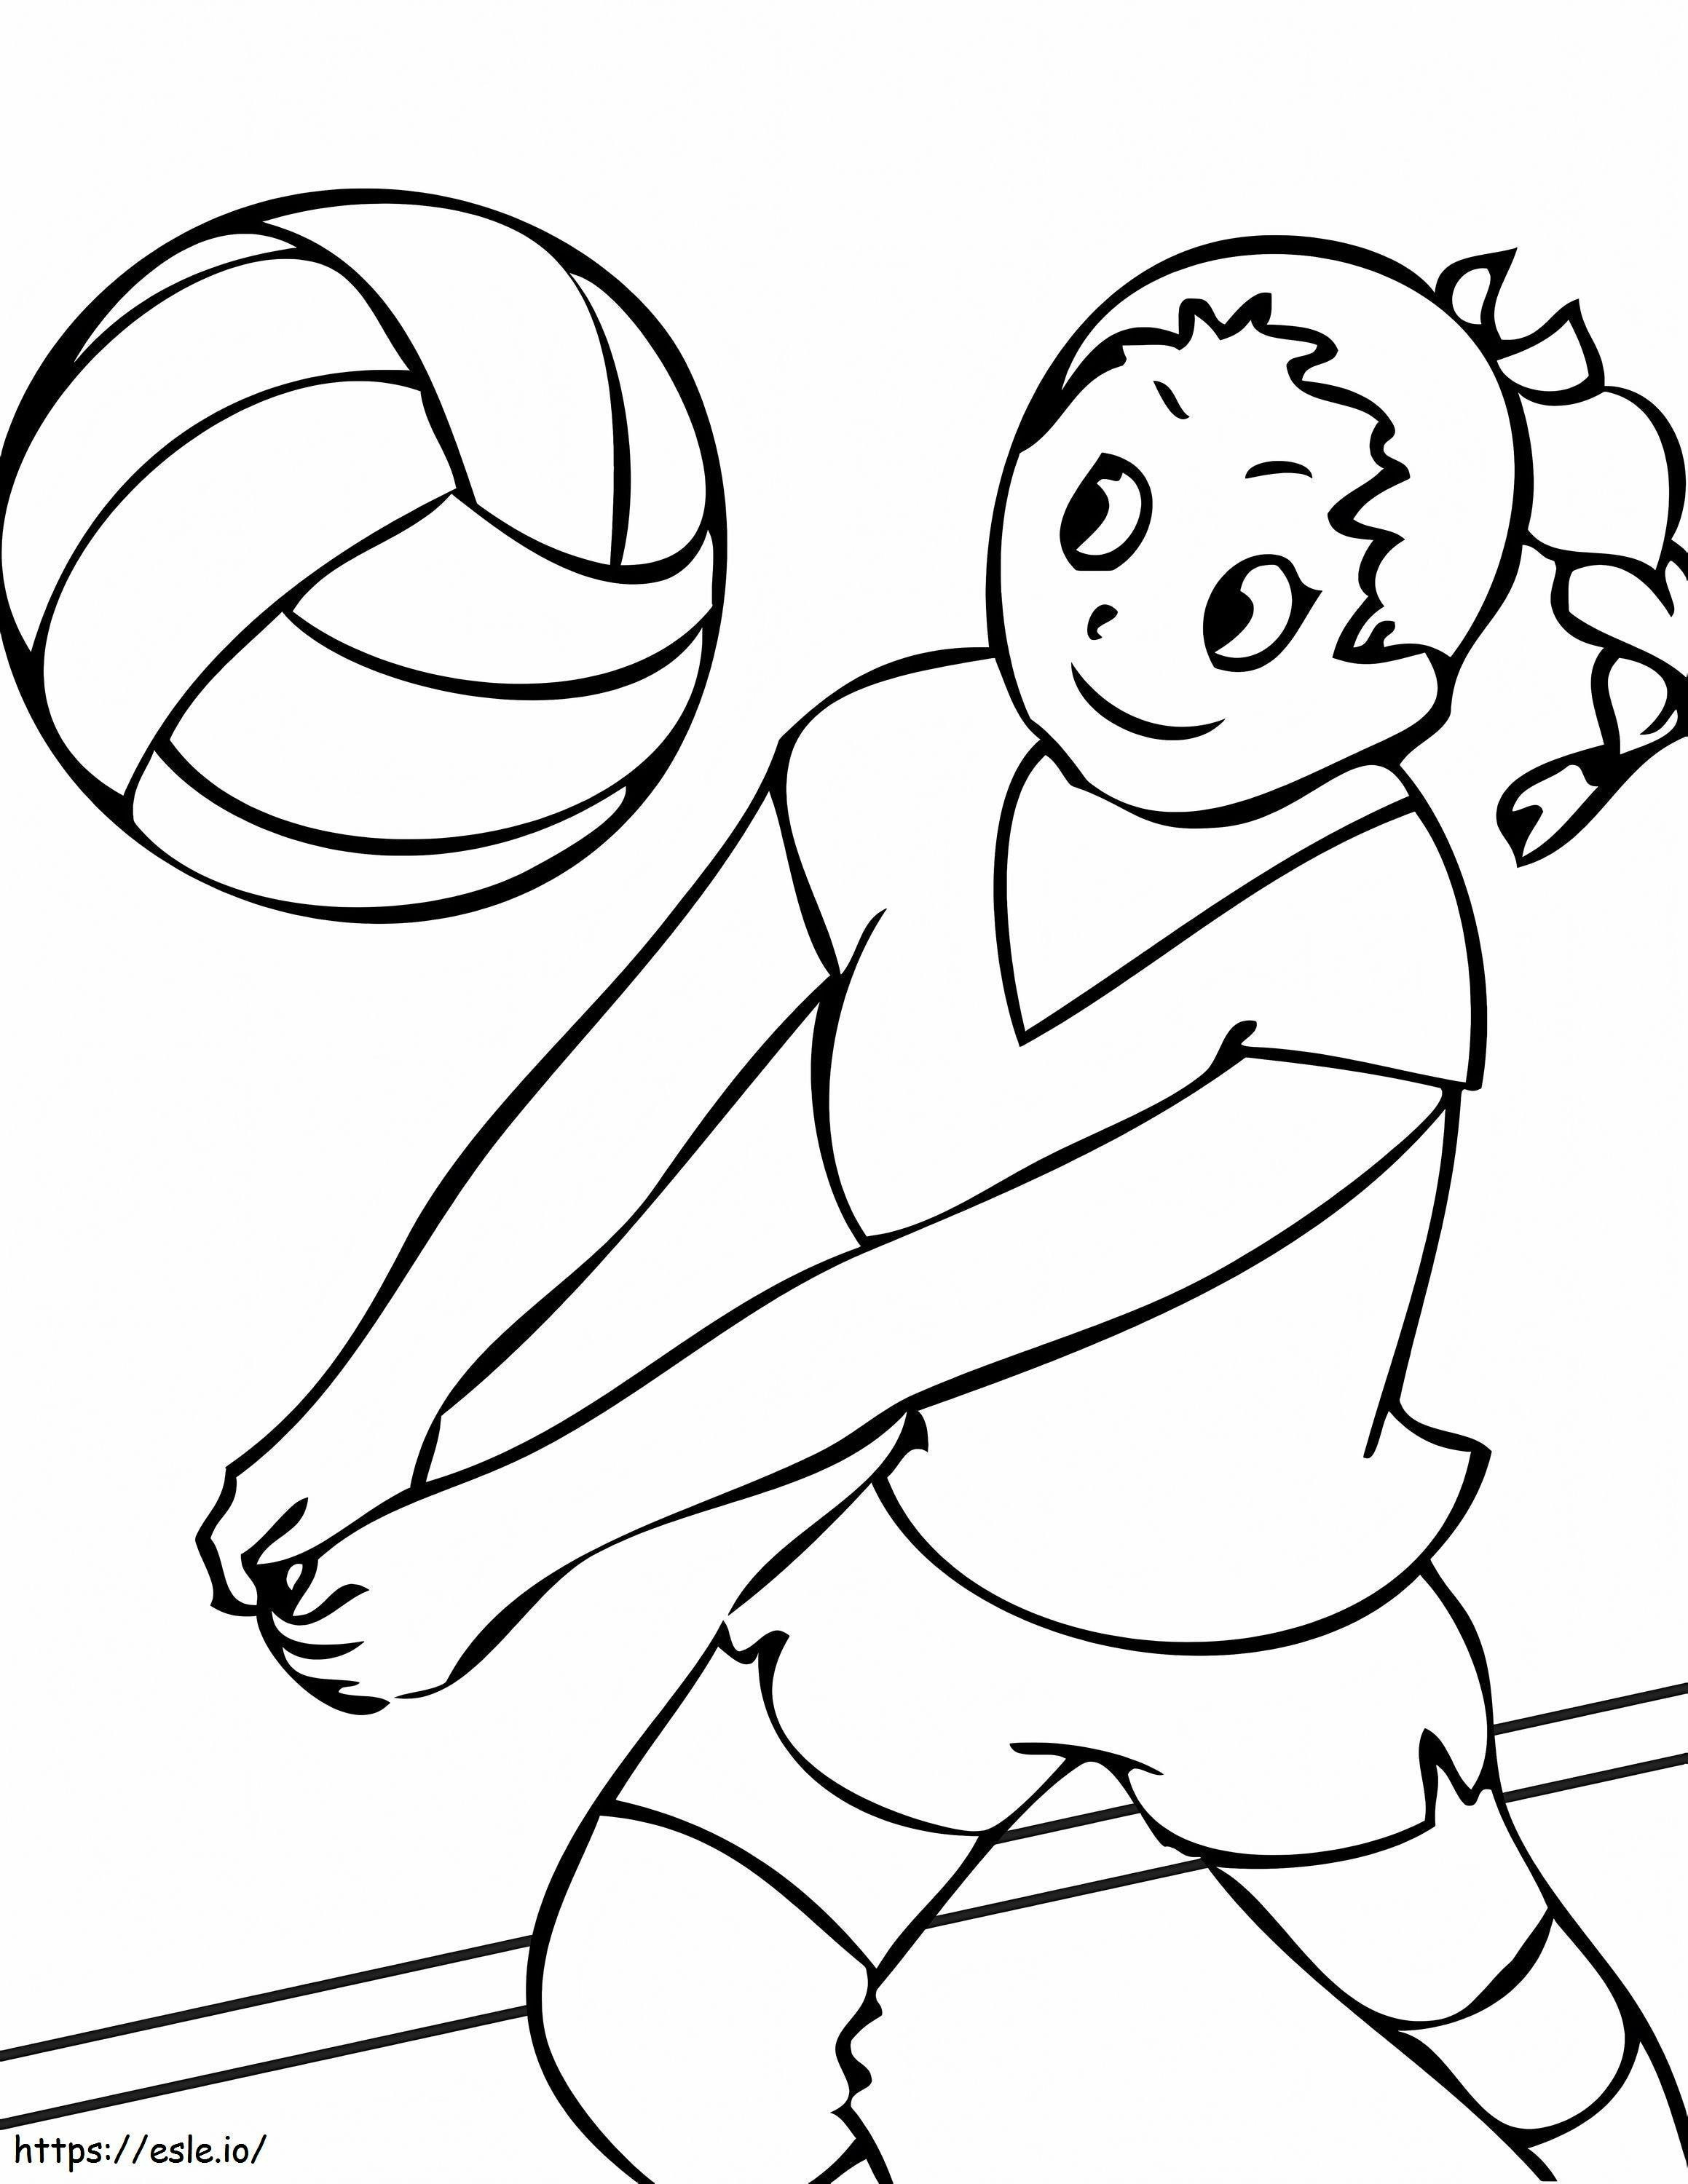 Dibujos De Voleibol 1 Para Colorear para colorear